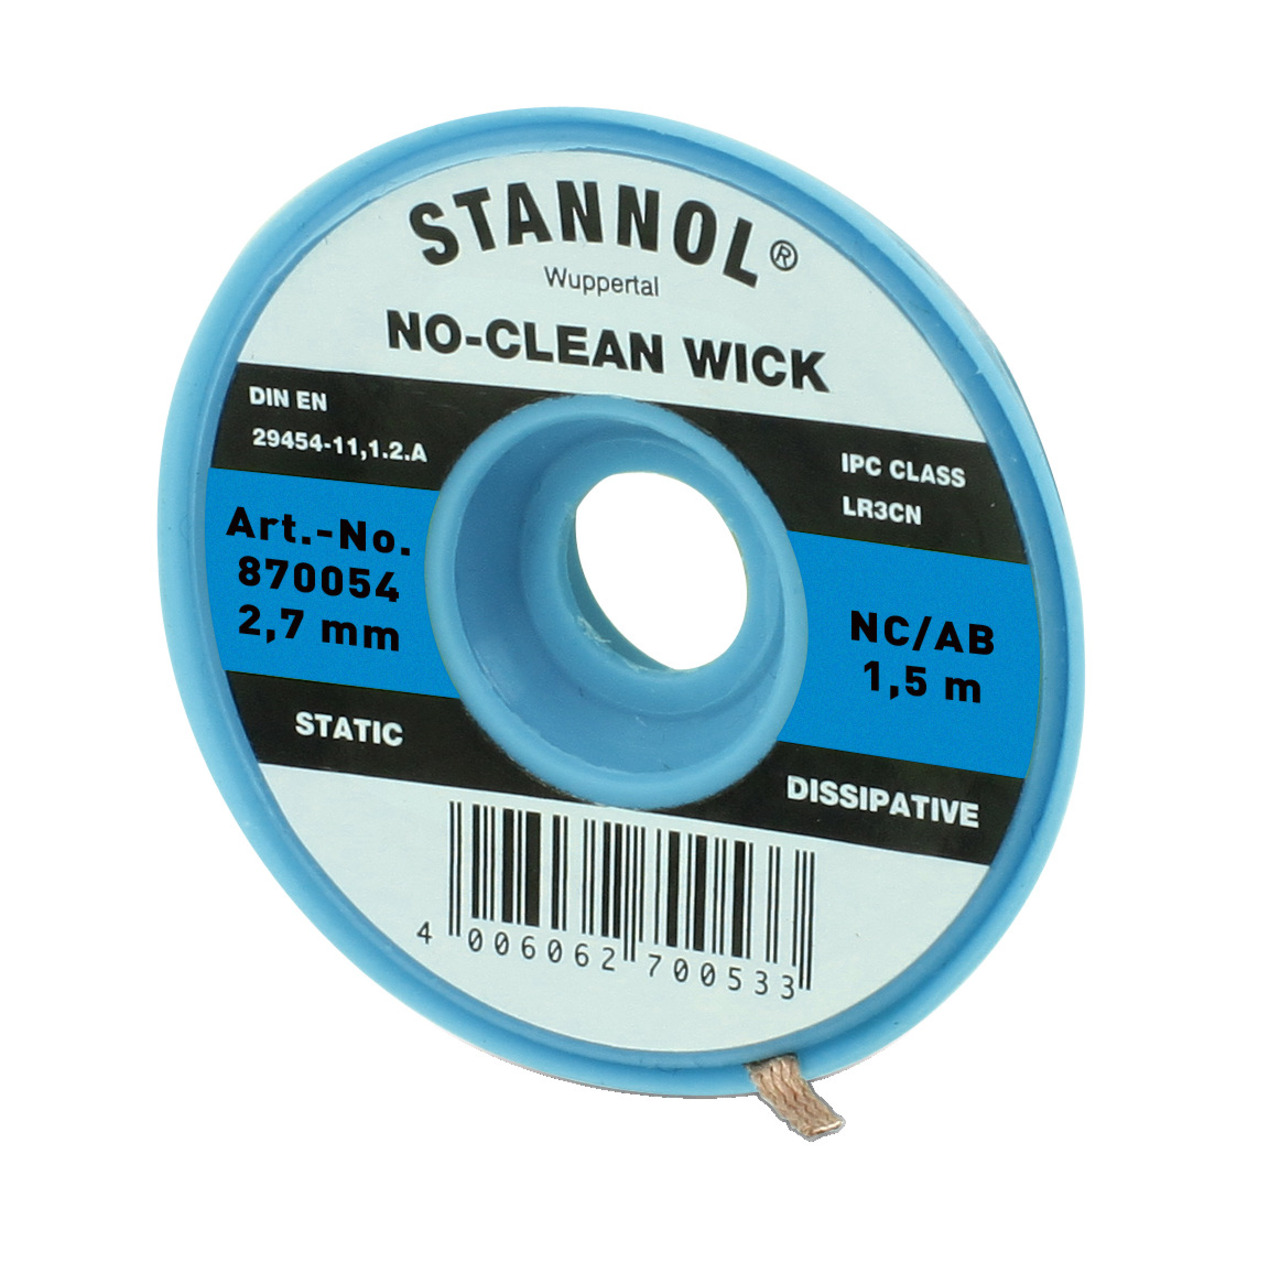 Stannol No-Clean Entlötlitze- ESD-verpackt- 1-5 m lang- 2-7 mm breit